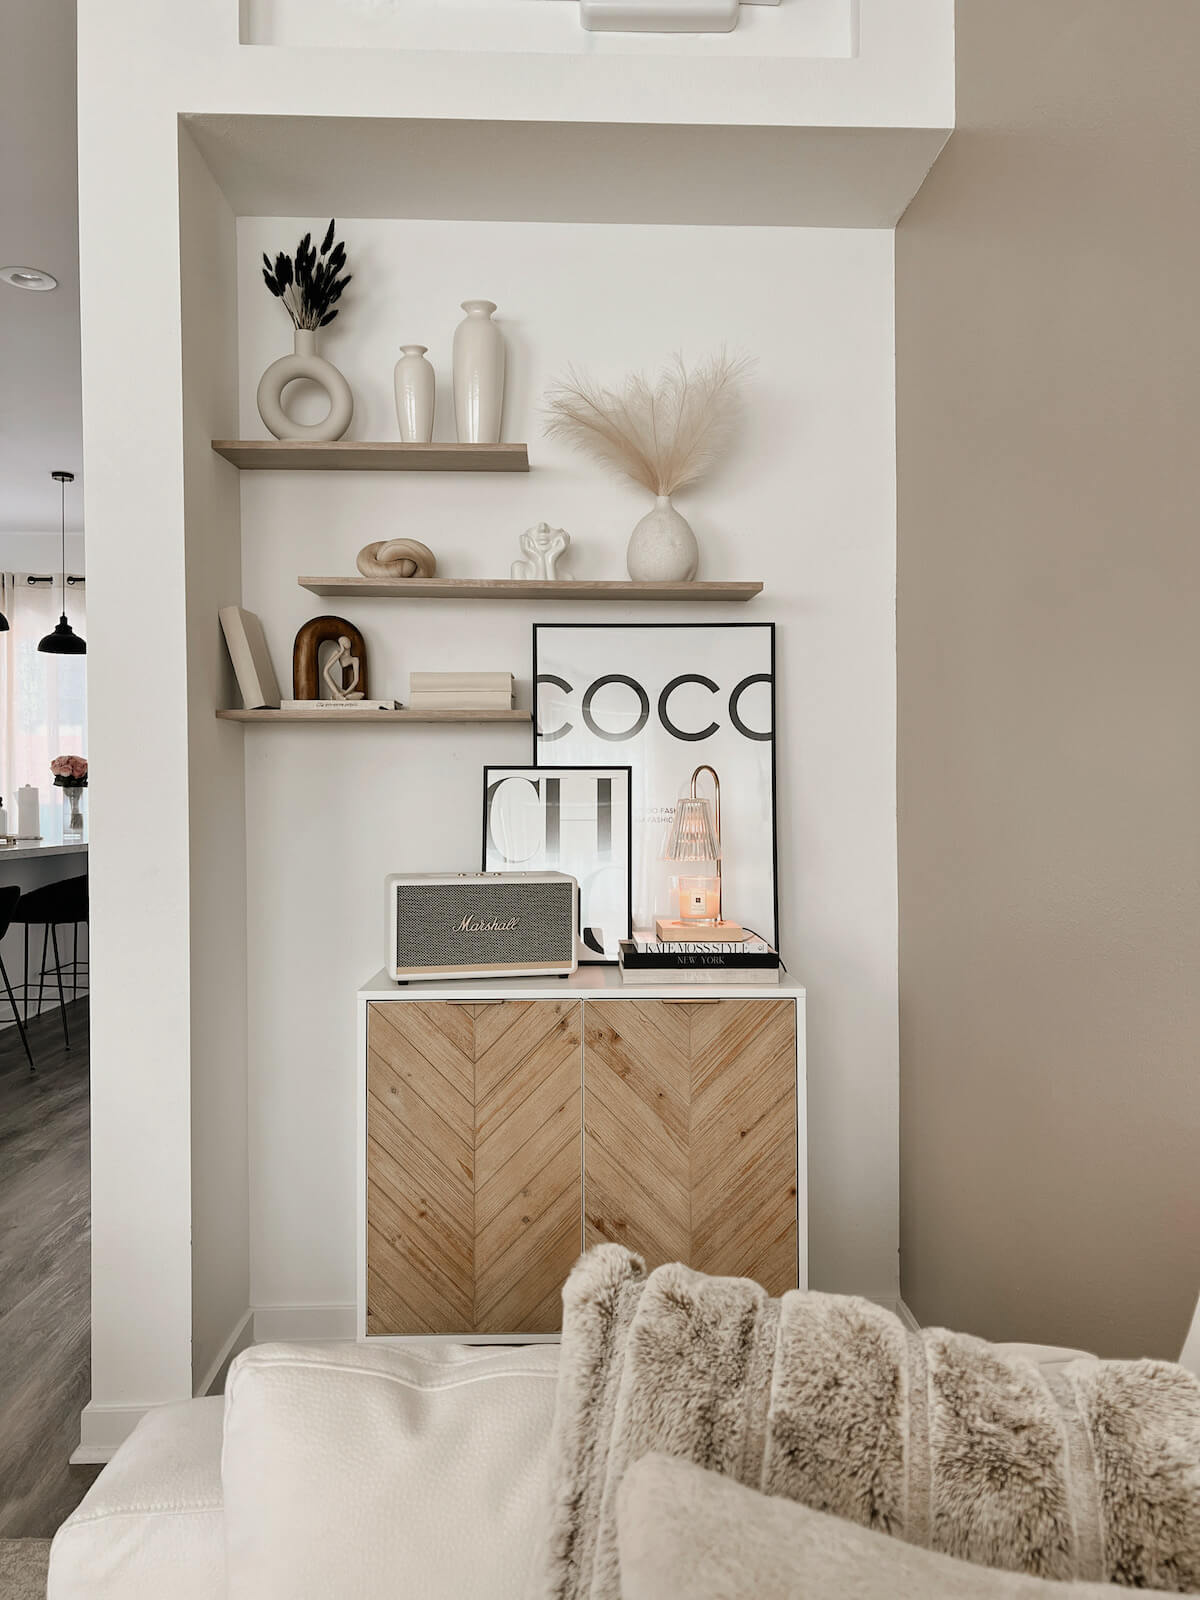 Sideboard Decor Inspo | Nathan James Sideboard | Floating Shelves | Shelf Styling | Shelf Decor | Neutral Home Decor